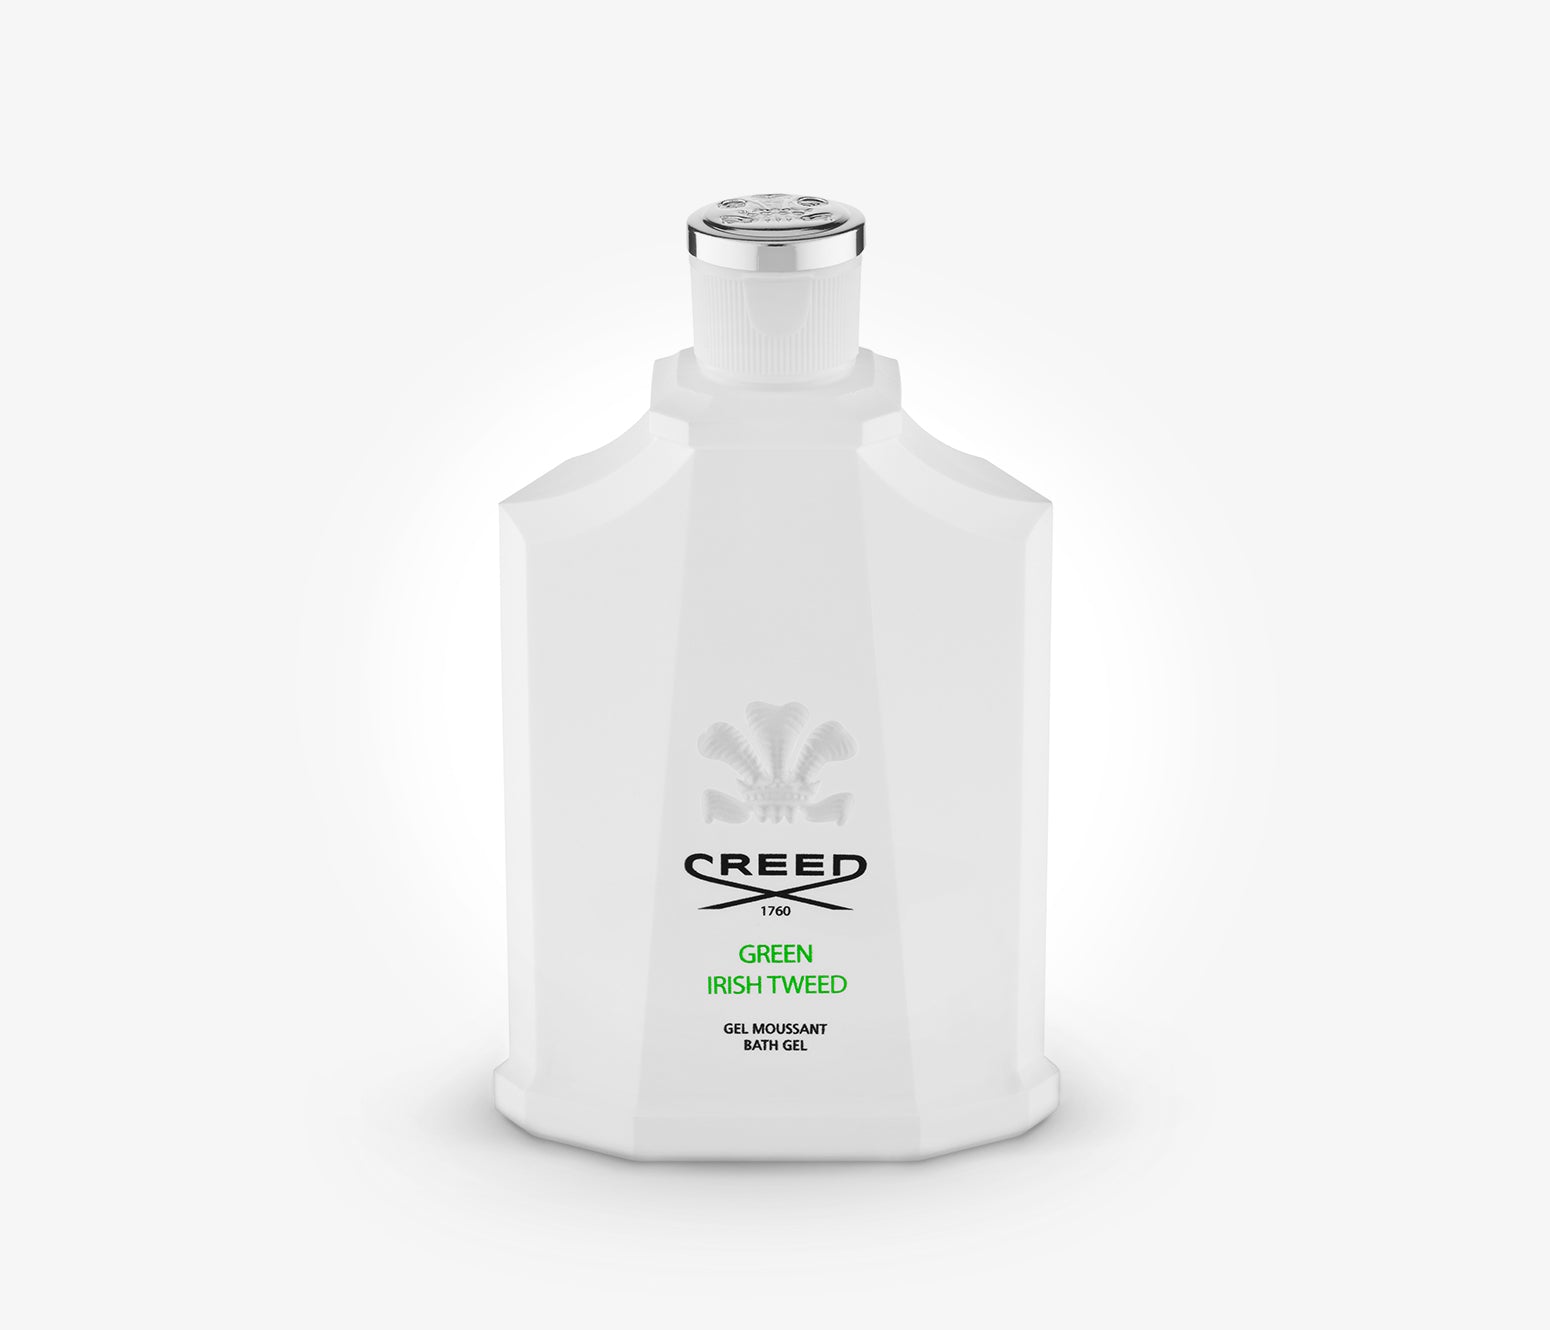 Creed - Green Irish Tweed Shower Gel - 200ml - 10000304 - Product Image - Fragrance - Les Senteurs